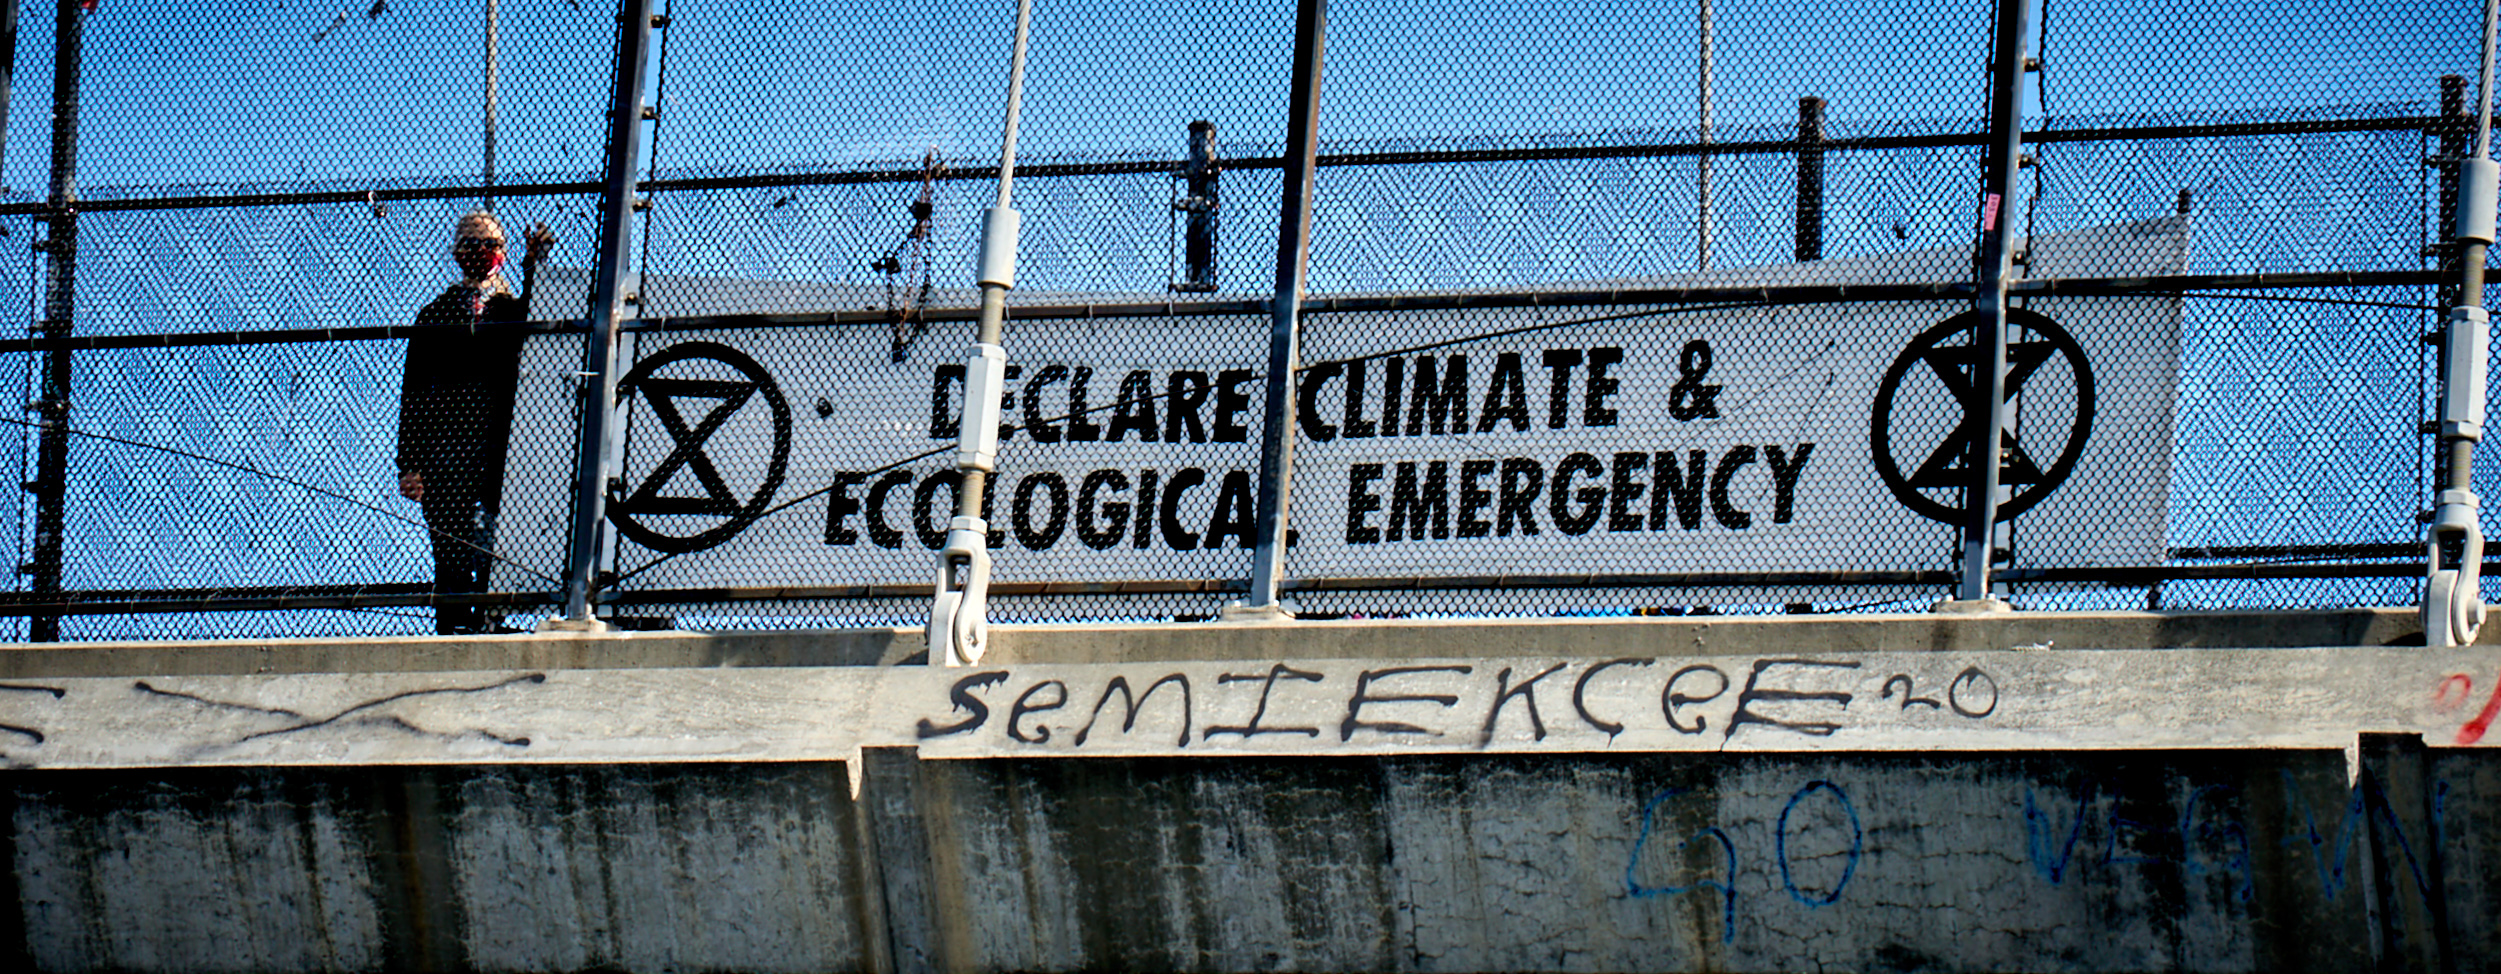 Declare Climate Emergency Now Campaign:April 21st, 2021